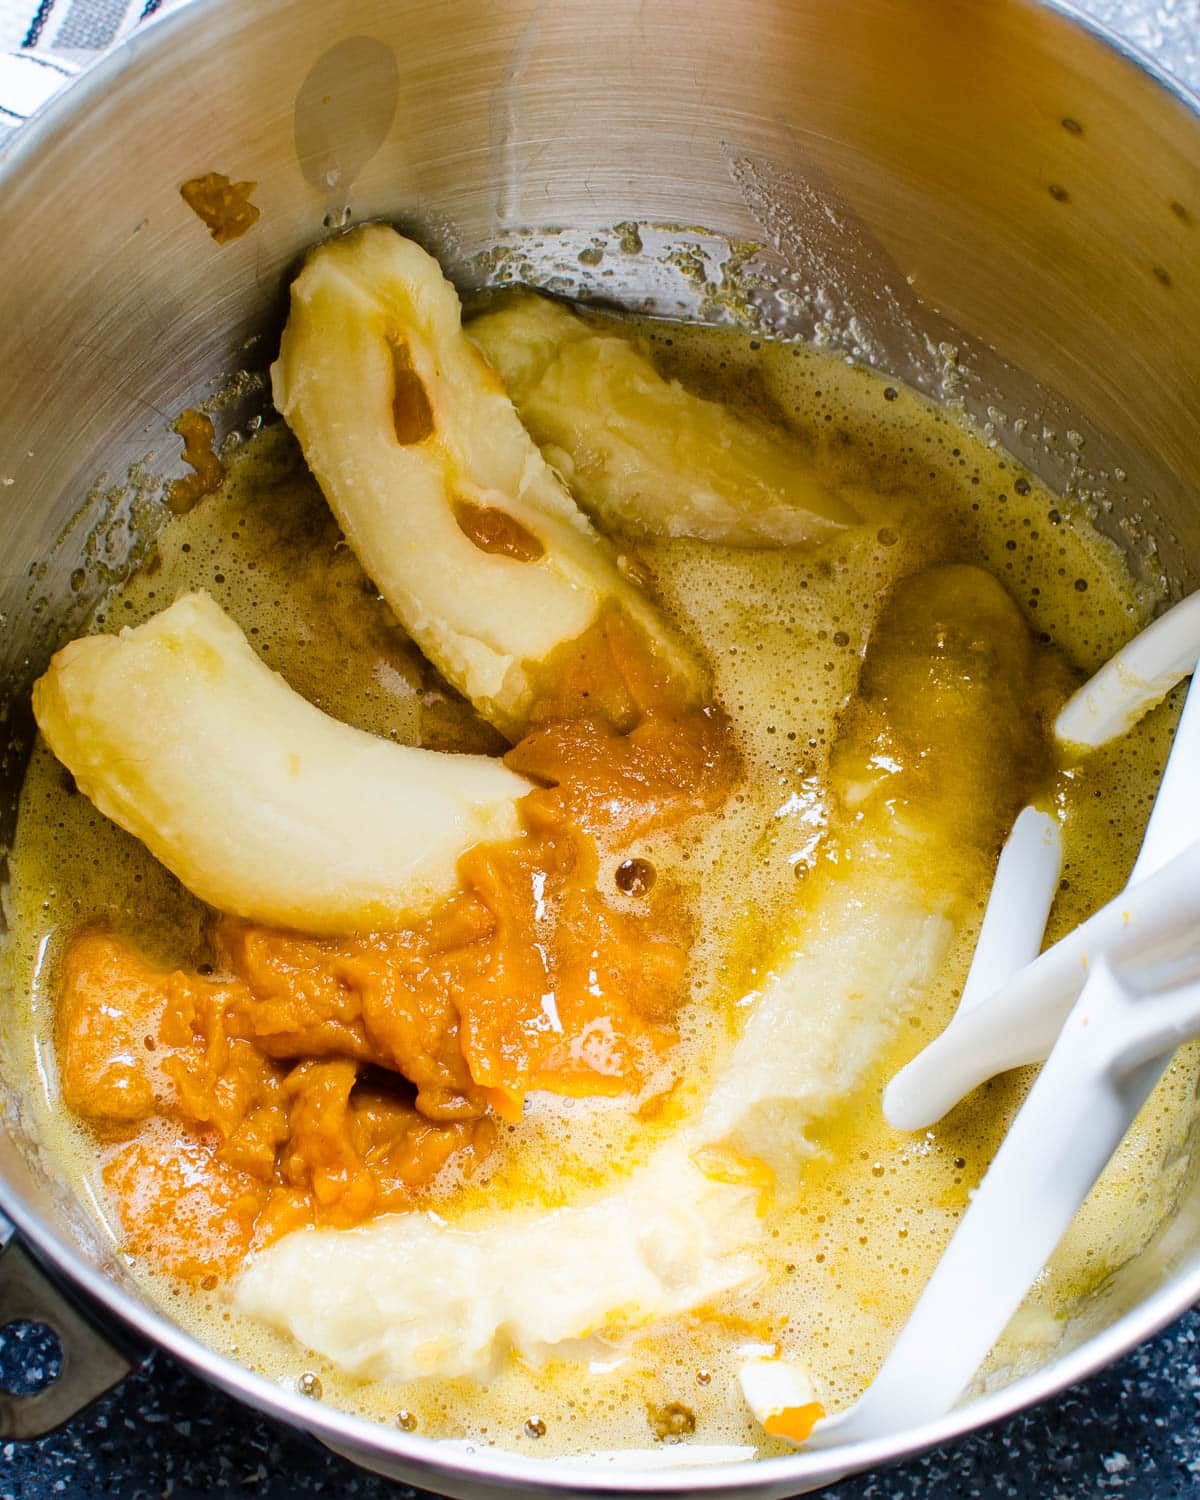 Adding pumpkin puree and ripe bananas.